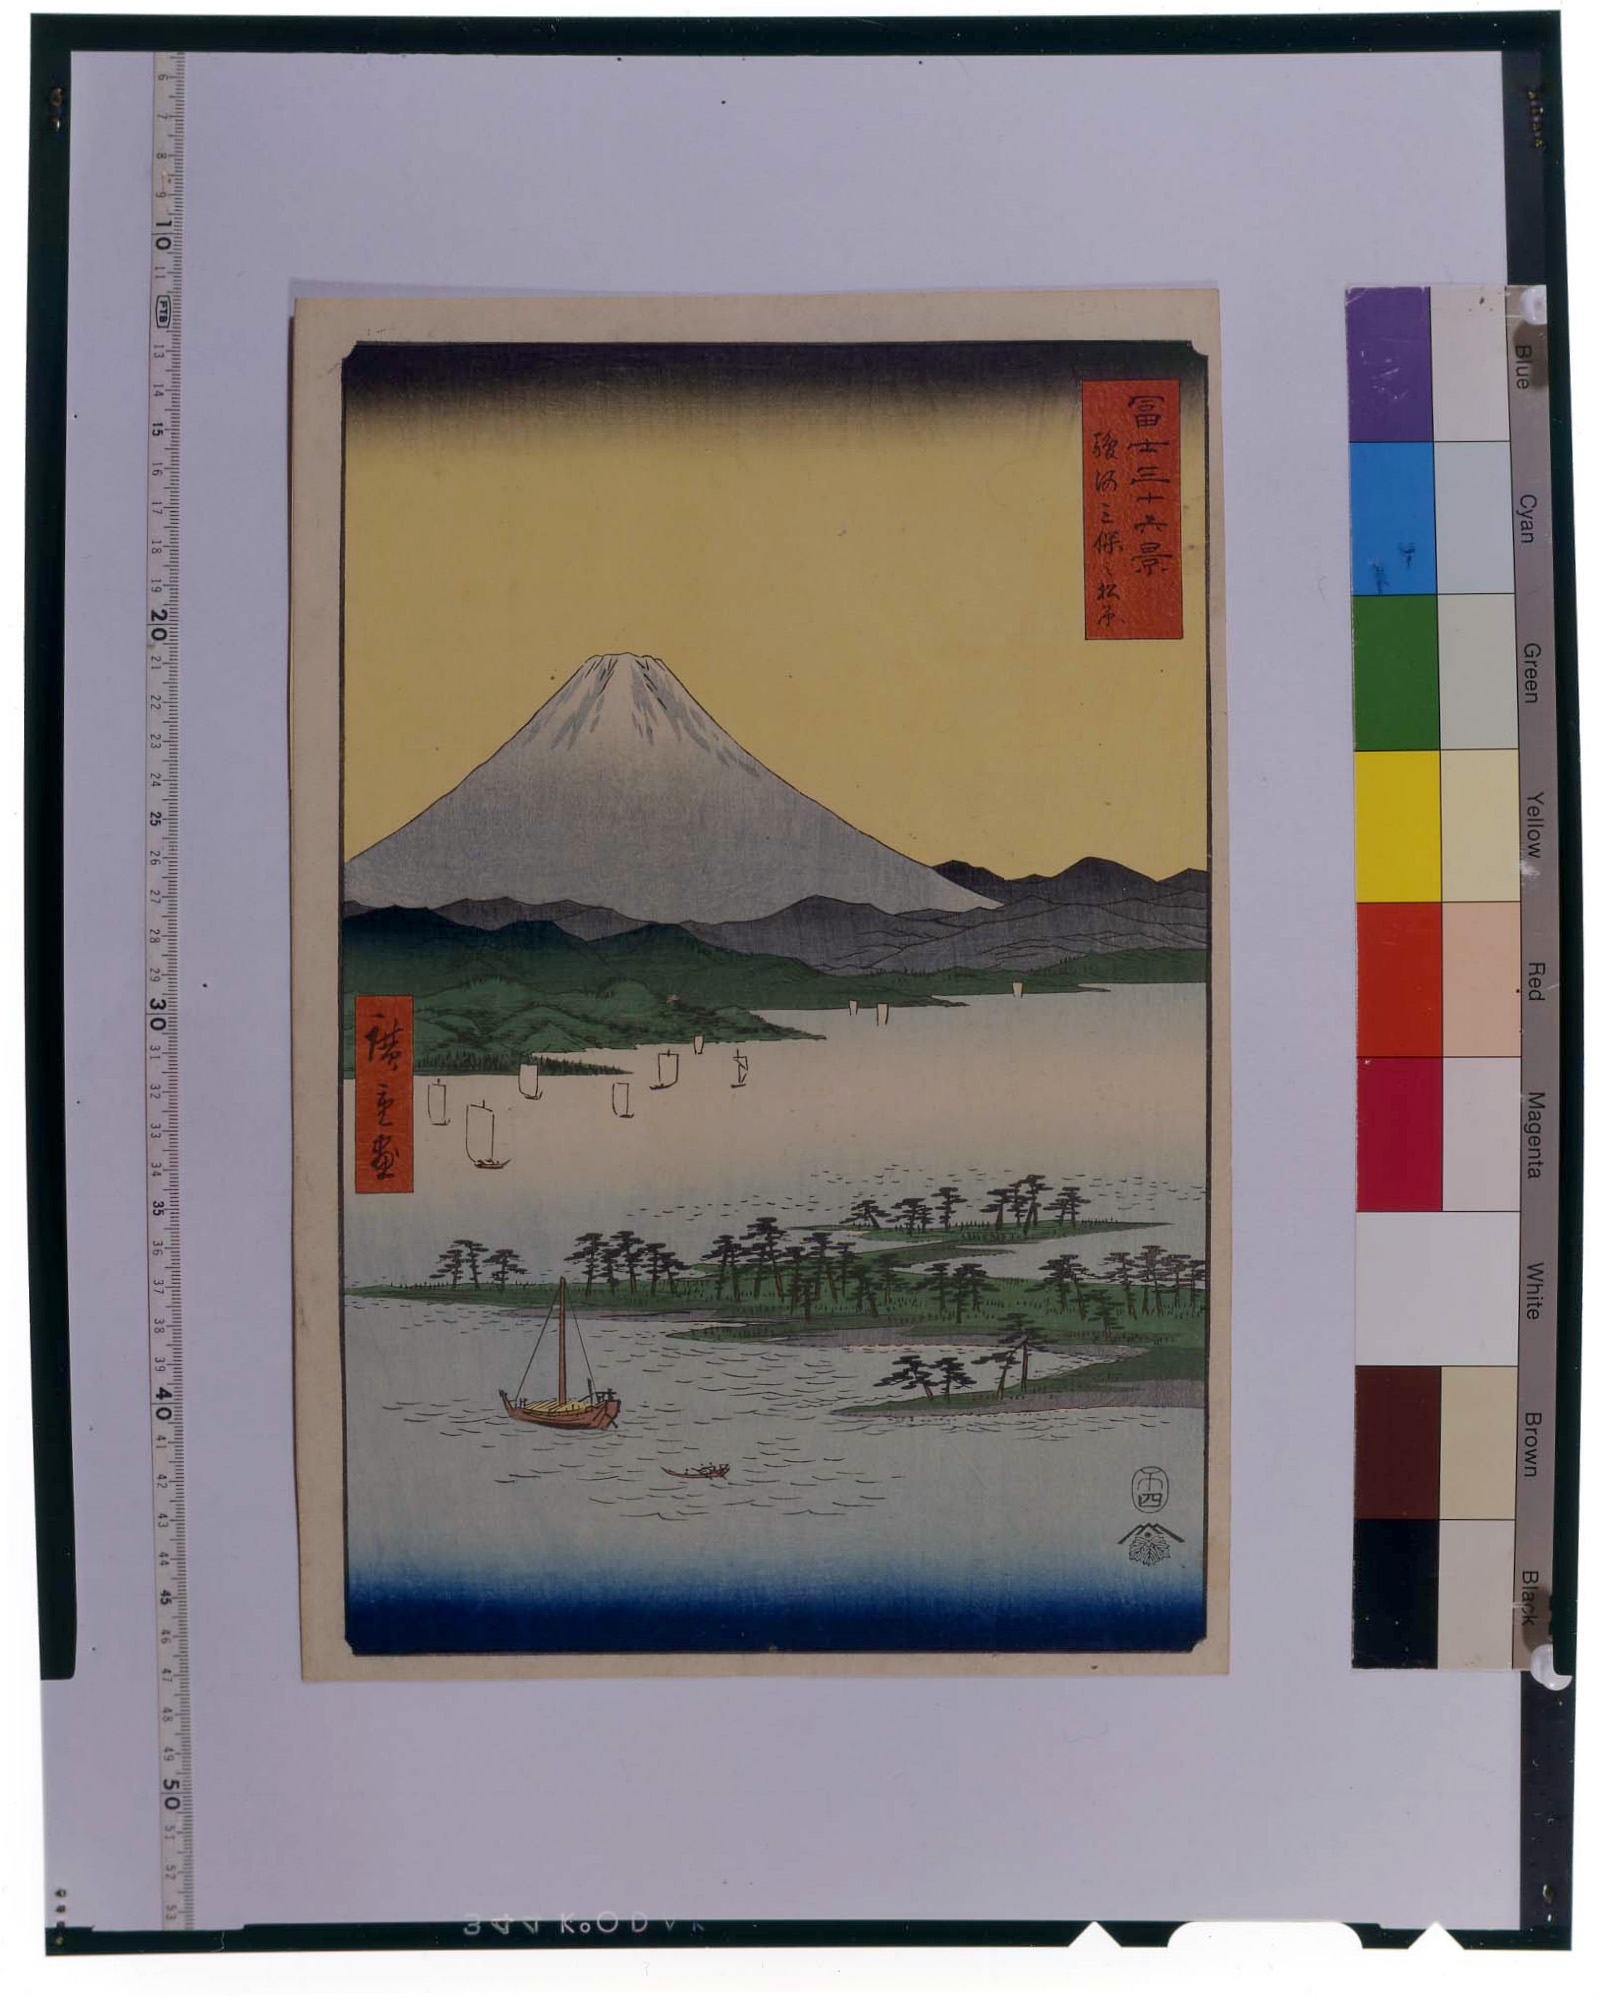 Utagawa Hiroshige, Fuji Sanjurokkei Suruga
                            Mihonomatsubara [Thirty-Six Views of Mount
                            Fuji: View of Mount Fuji from the Miho Pine Grove in Suruga],
                        1859, Ota Memorial Museum of Art